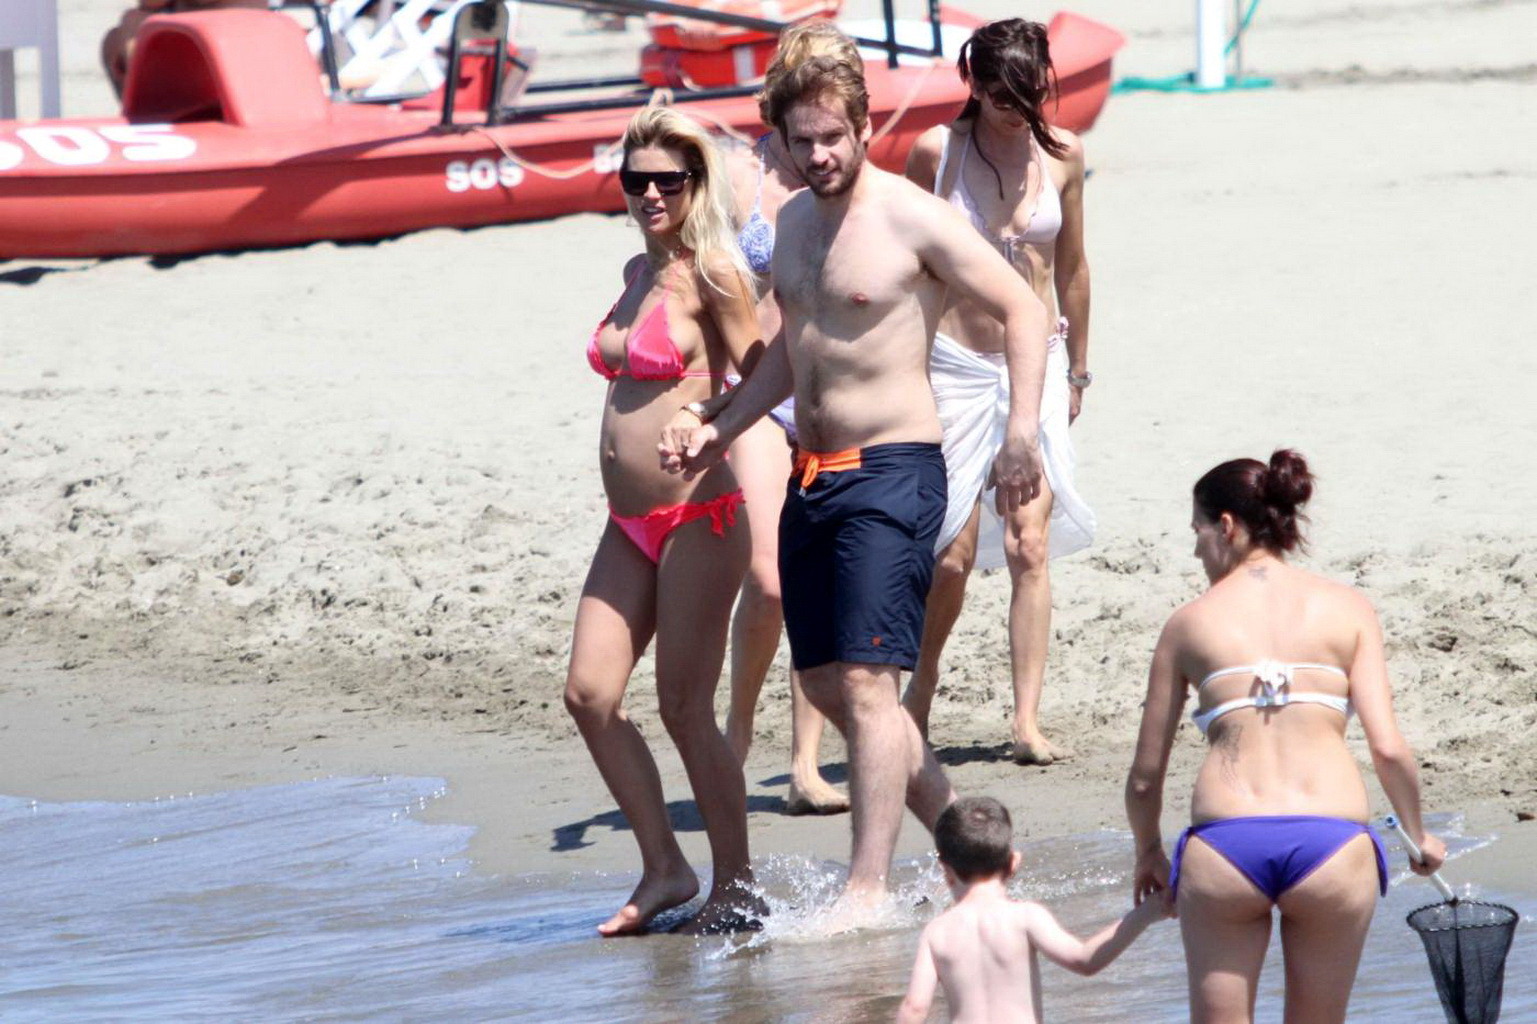 Michelle hunziker embarazada con un bikini en la playa de forte dei marmi, ita
 #75227832